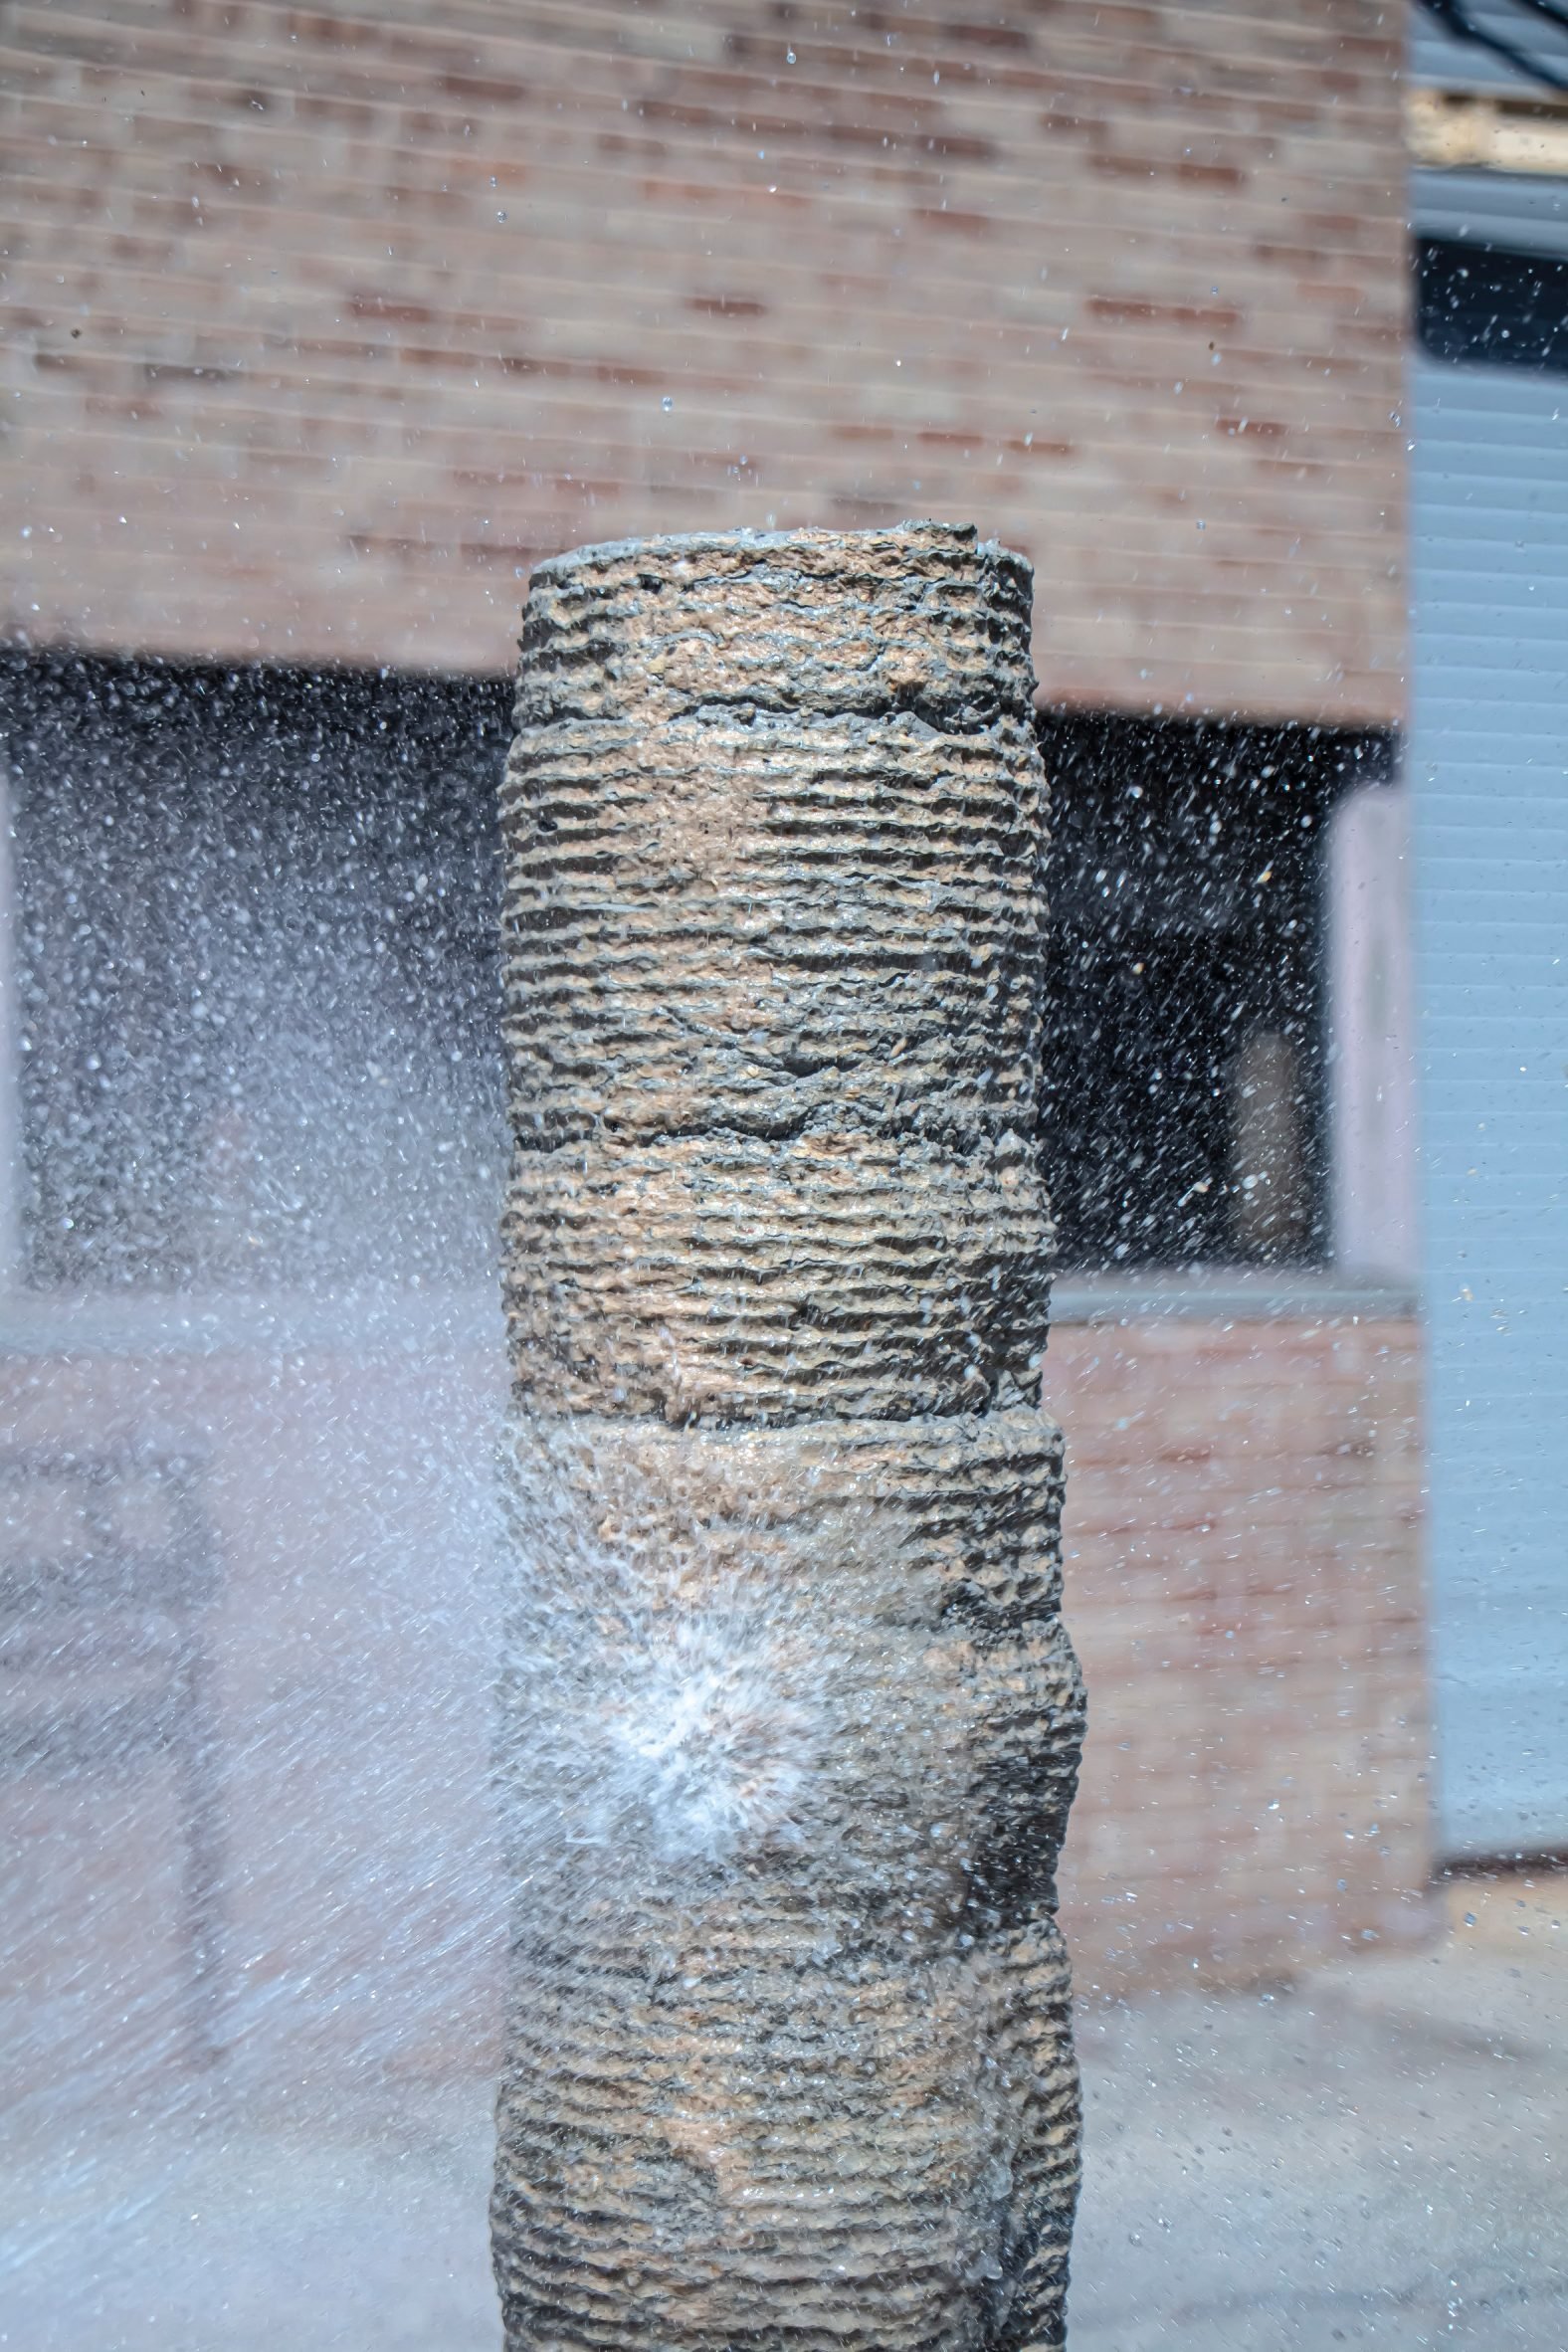 university-of-michigans-dart-lab-creates-biodegradable-concrete-casts-using-sawdust-4 University of Michigan's DART Lab creates biodegradable concrete casts using sawdust